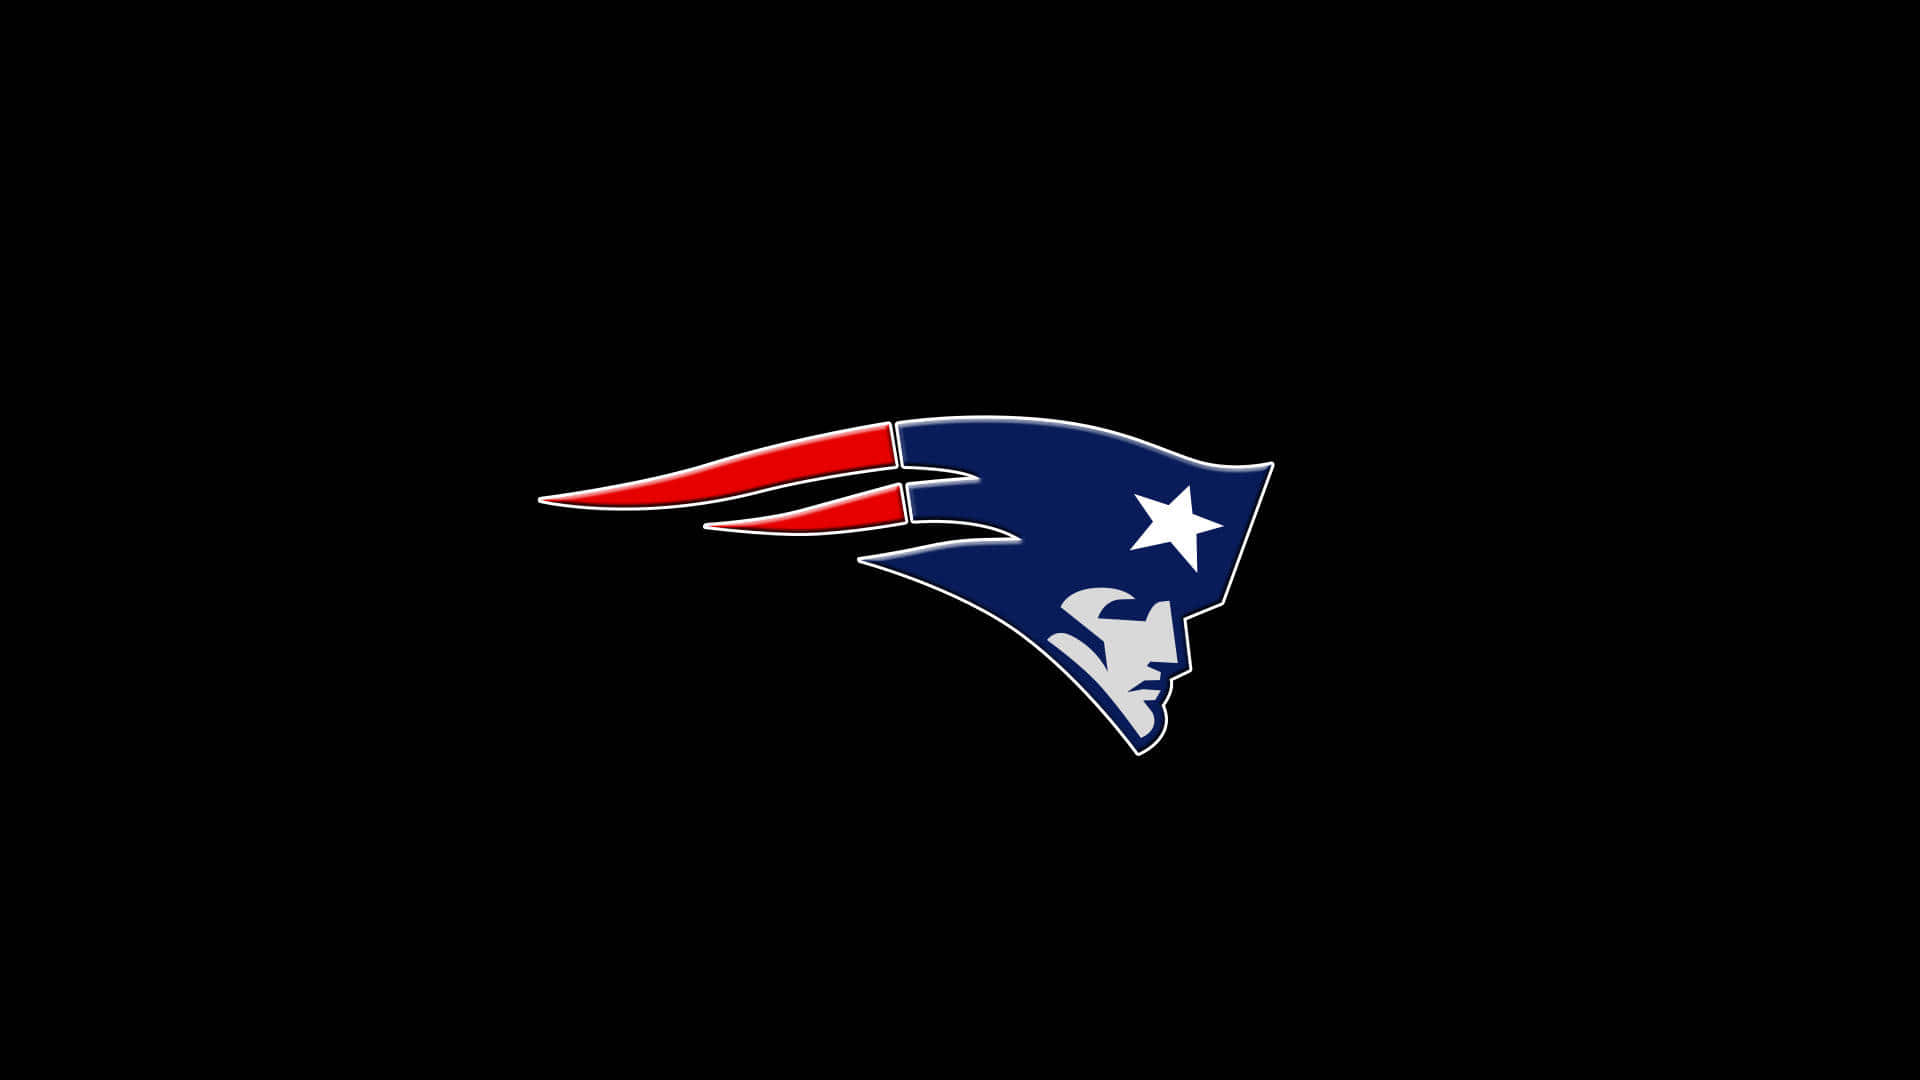 America’s Super Bowl Champions, The New England Patriots